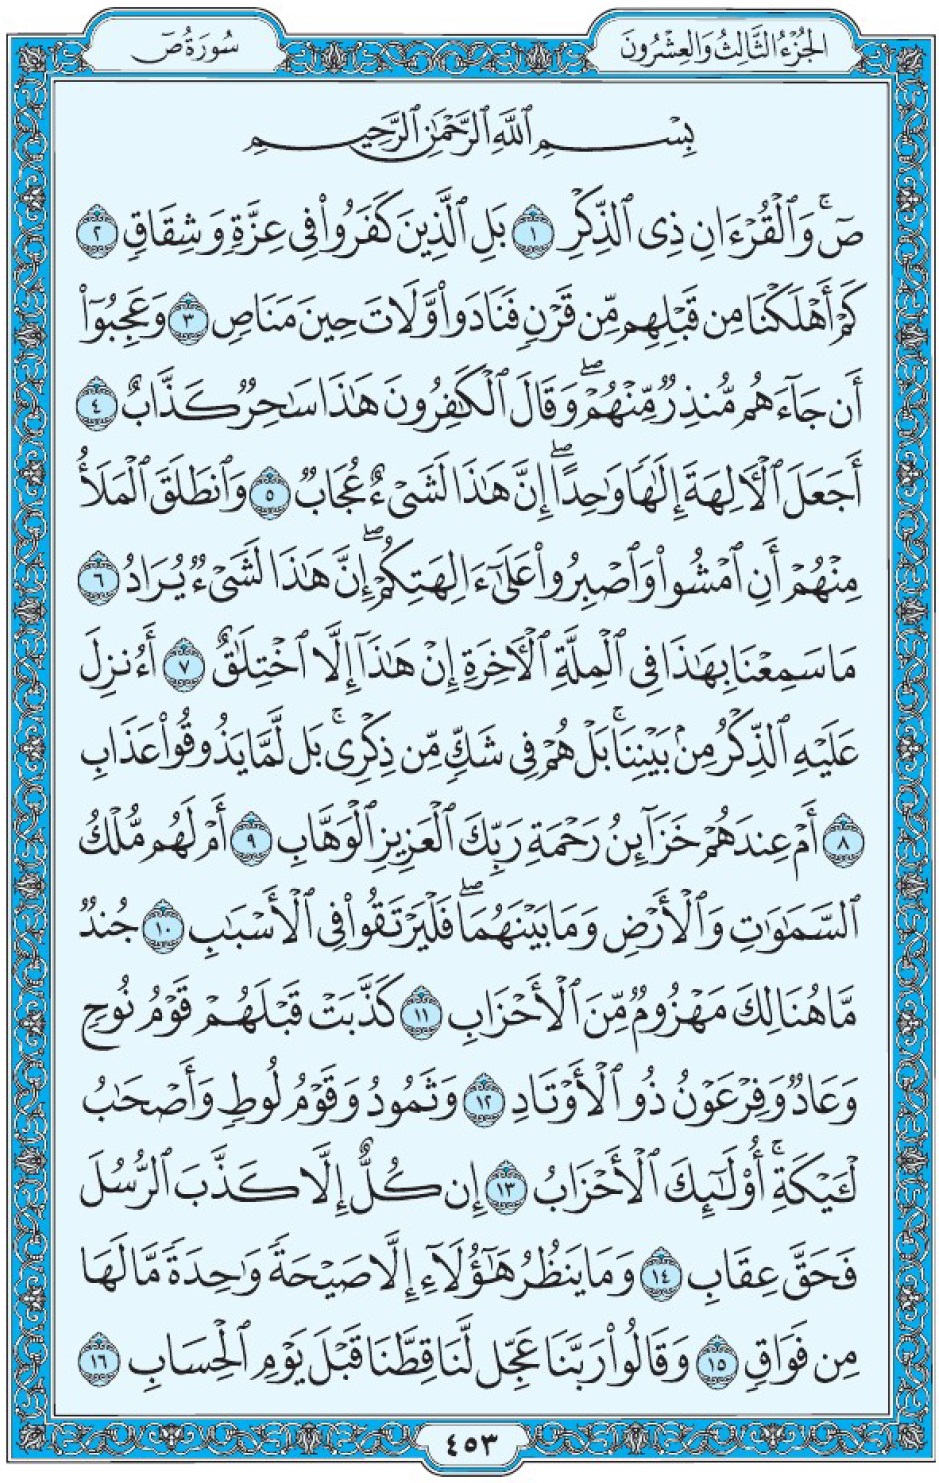 Коран Мединский мусхаф страница 453, сура 38 Сад سورة ٣٨ ص 